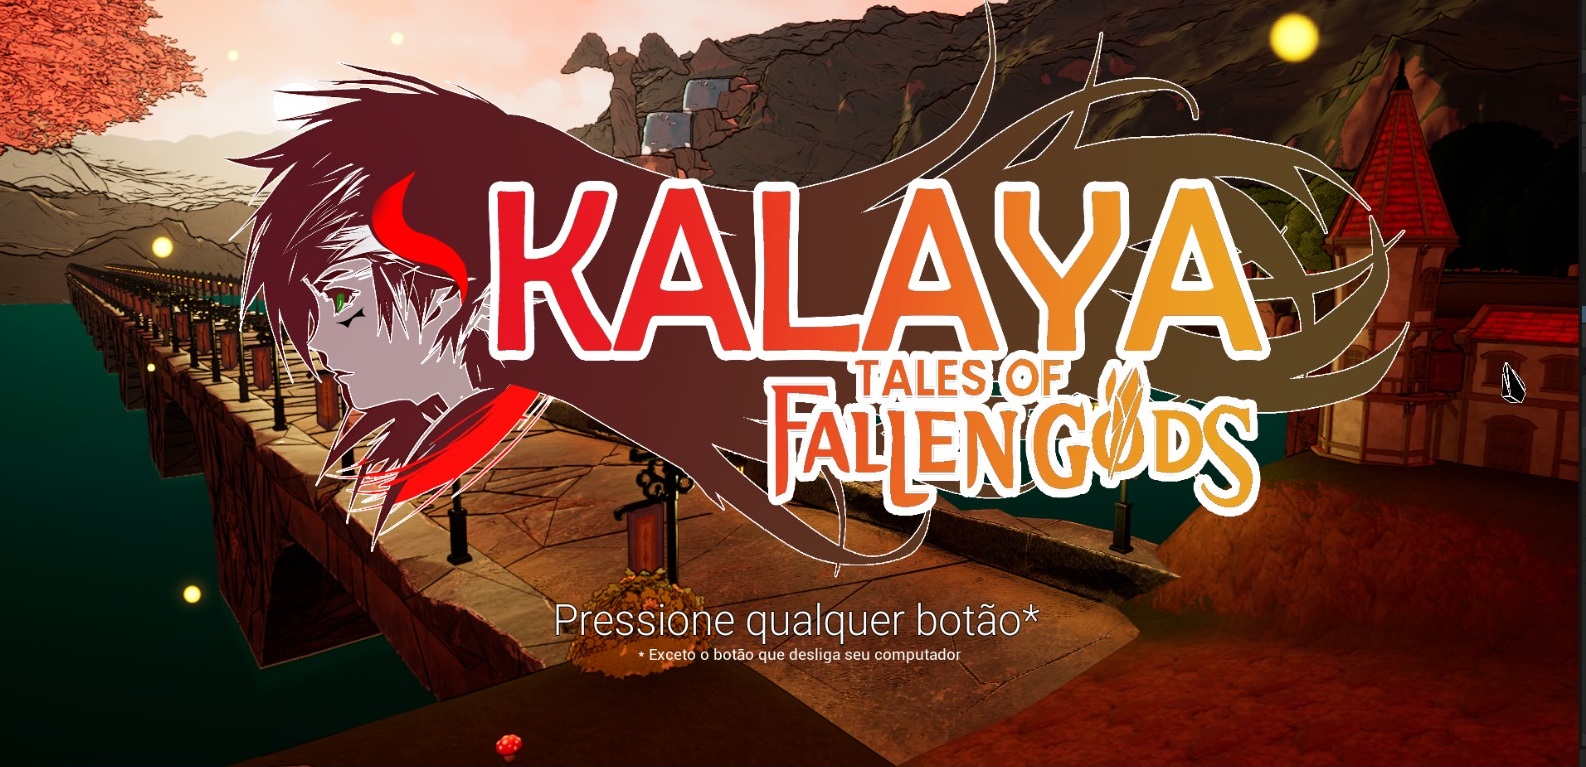 Kalaya - Tales of fallen gods